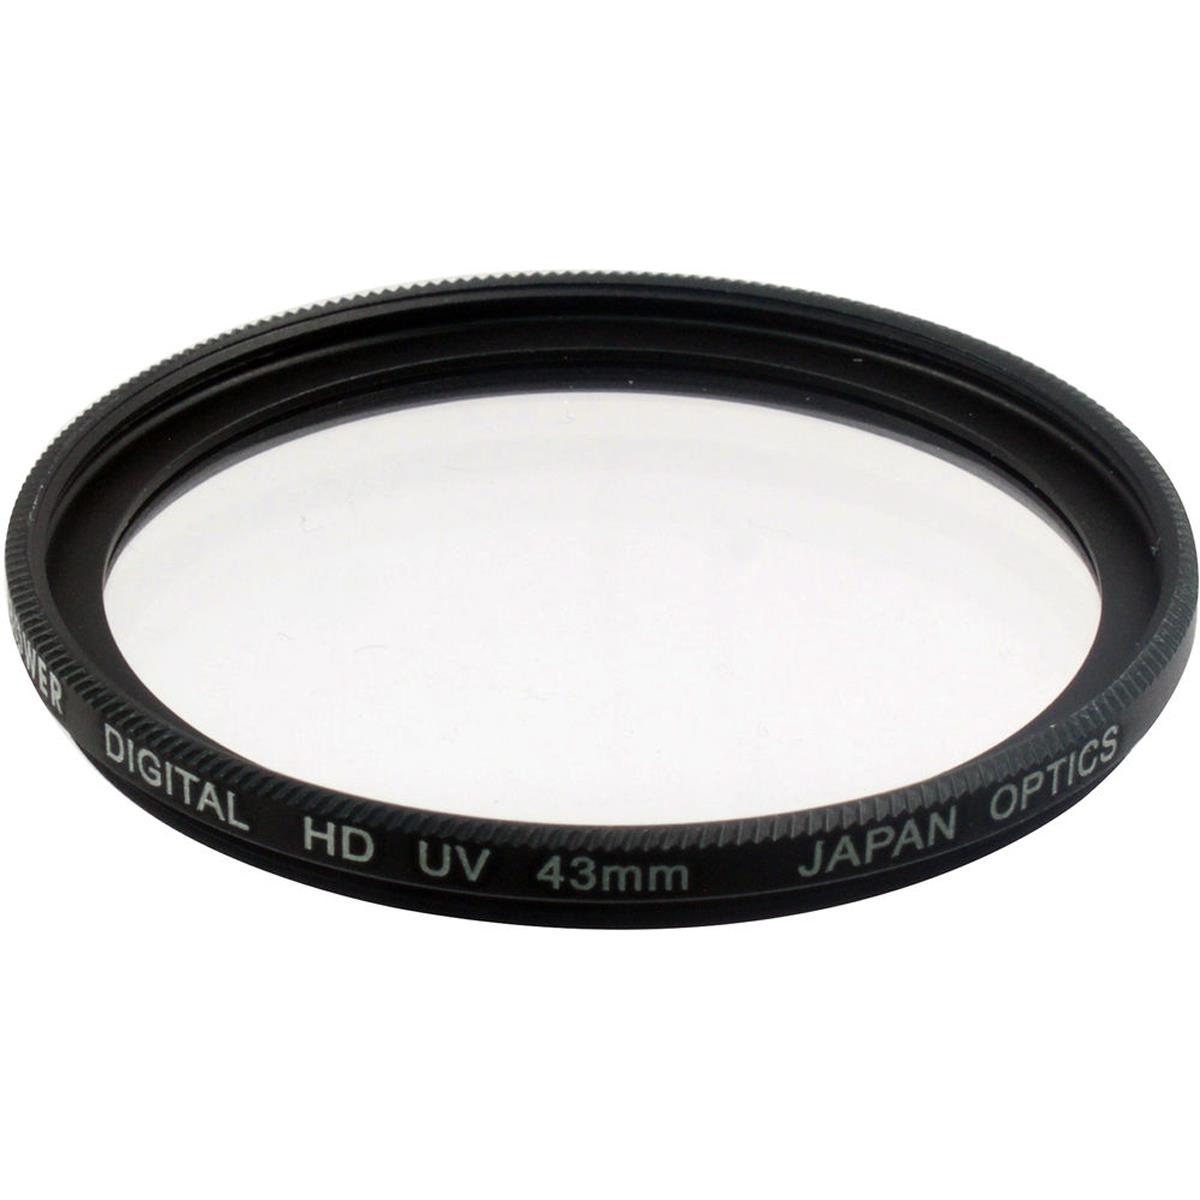 Bower 43mm Digital HD High-Definition UV Filter цена и фото